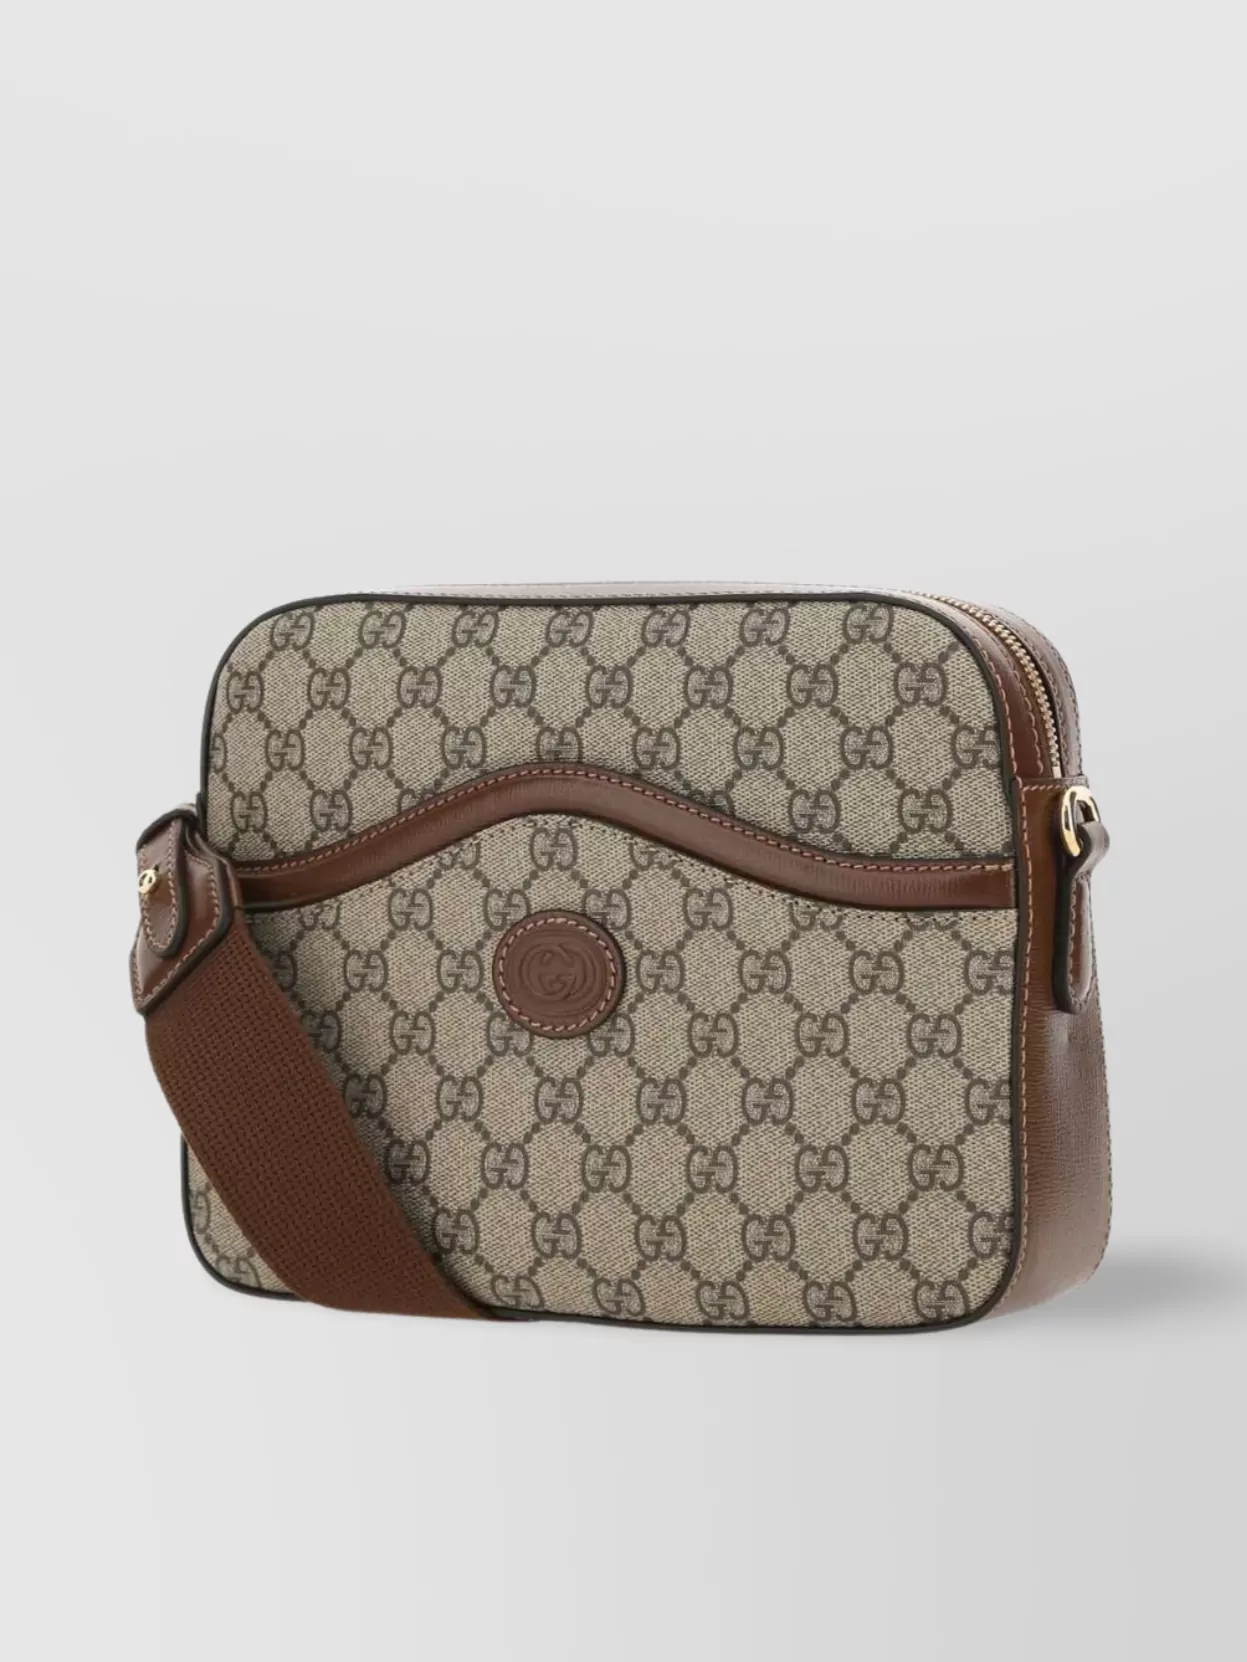 Gucci Monogram Canvas Crossbody Bag With Leather Trim